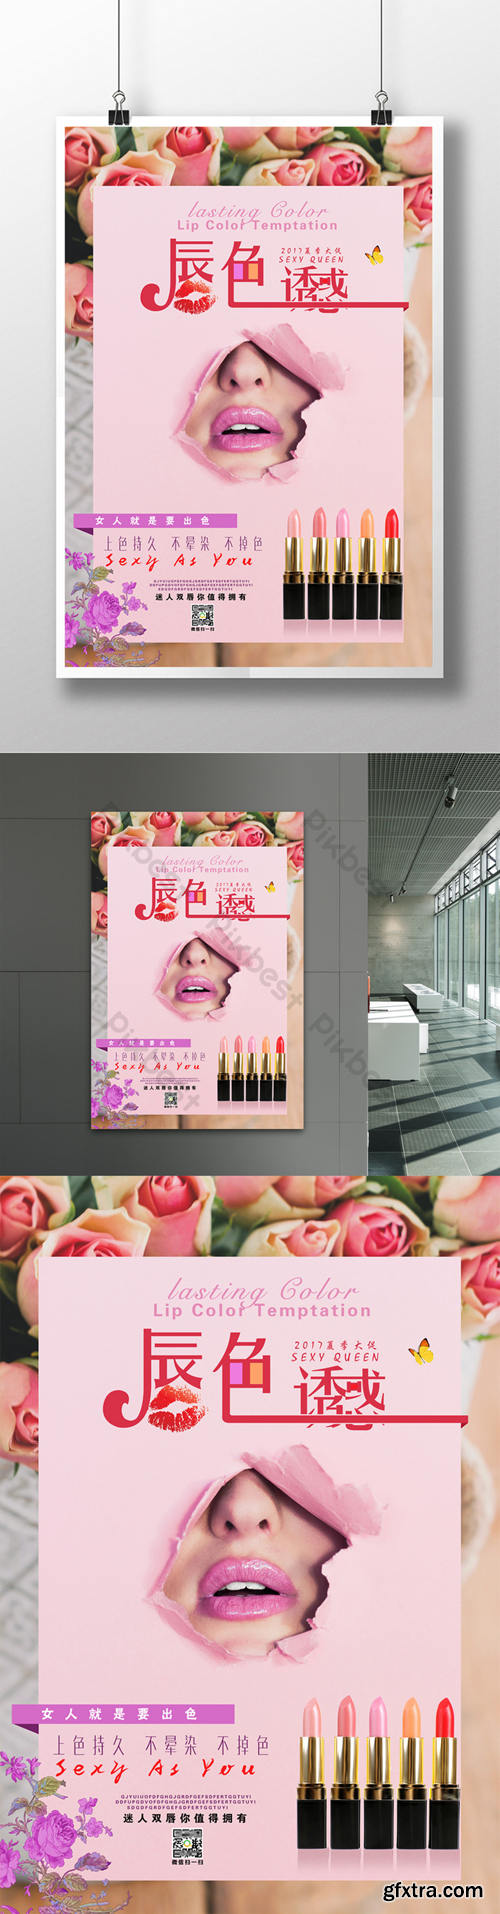 Pink Fashion Cosmetic Lipstick Lipstick Lip Gloss Lip Color Shopping Mall Poster Template PSD